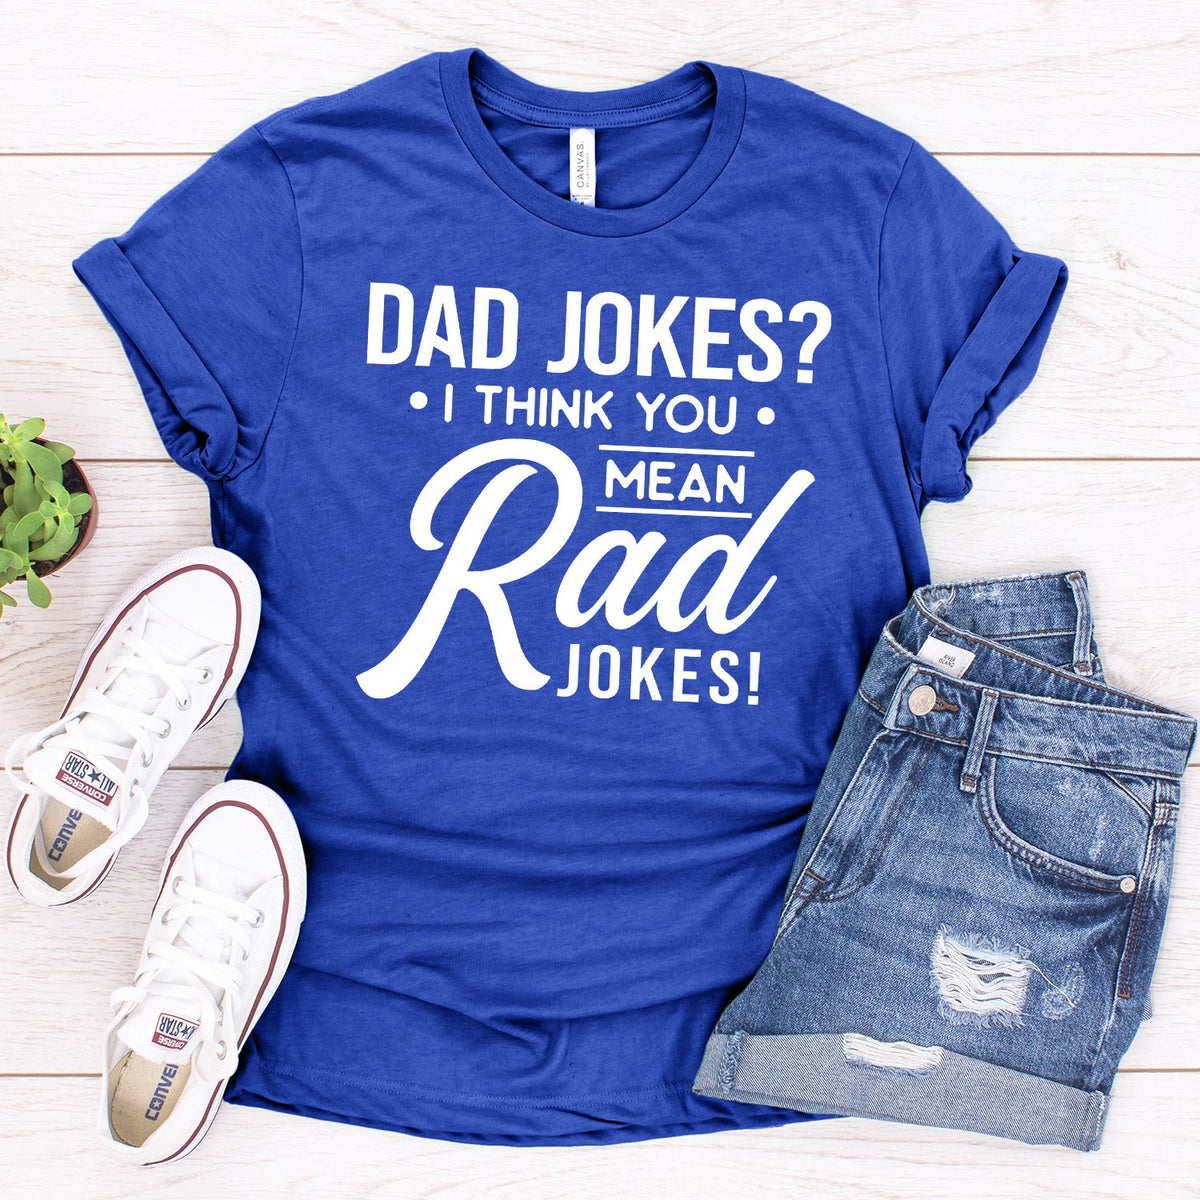 Dad Jokes? I Think You Mean Rad Jokes - Short Sleeve Tee Shirt